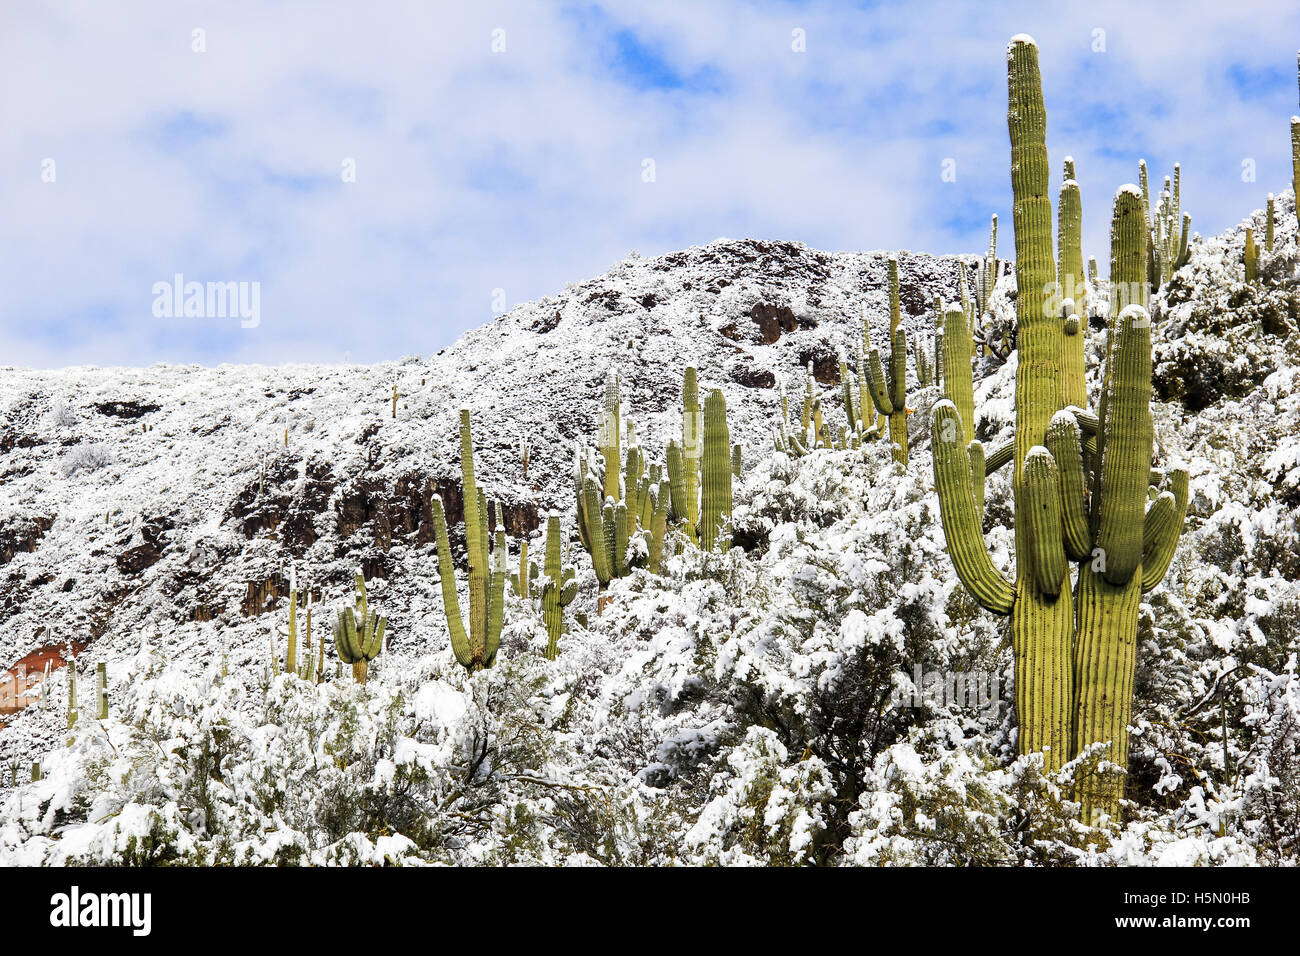 Saguaro Kaktus im Schnee. Arizona Wüste Winterszene Stockfoto